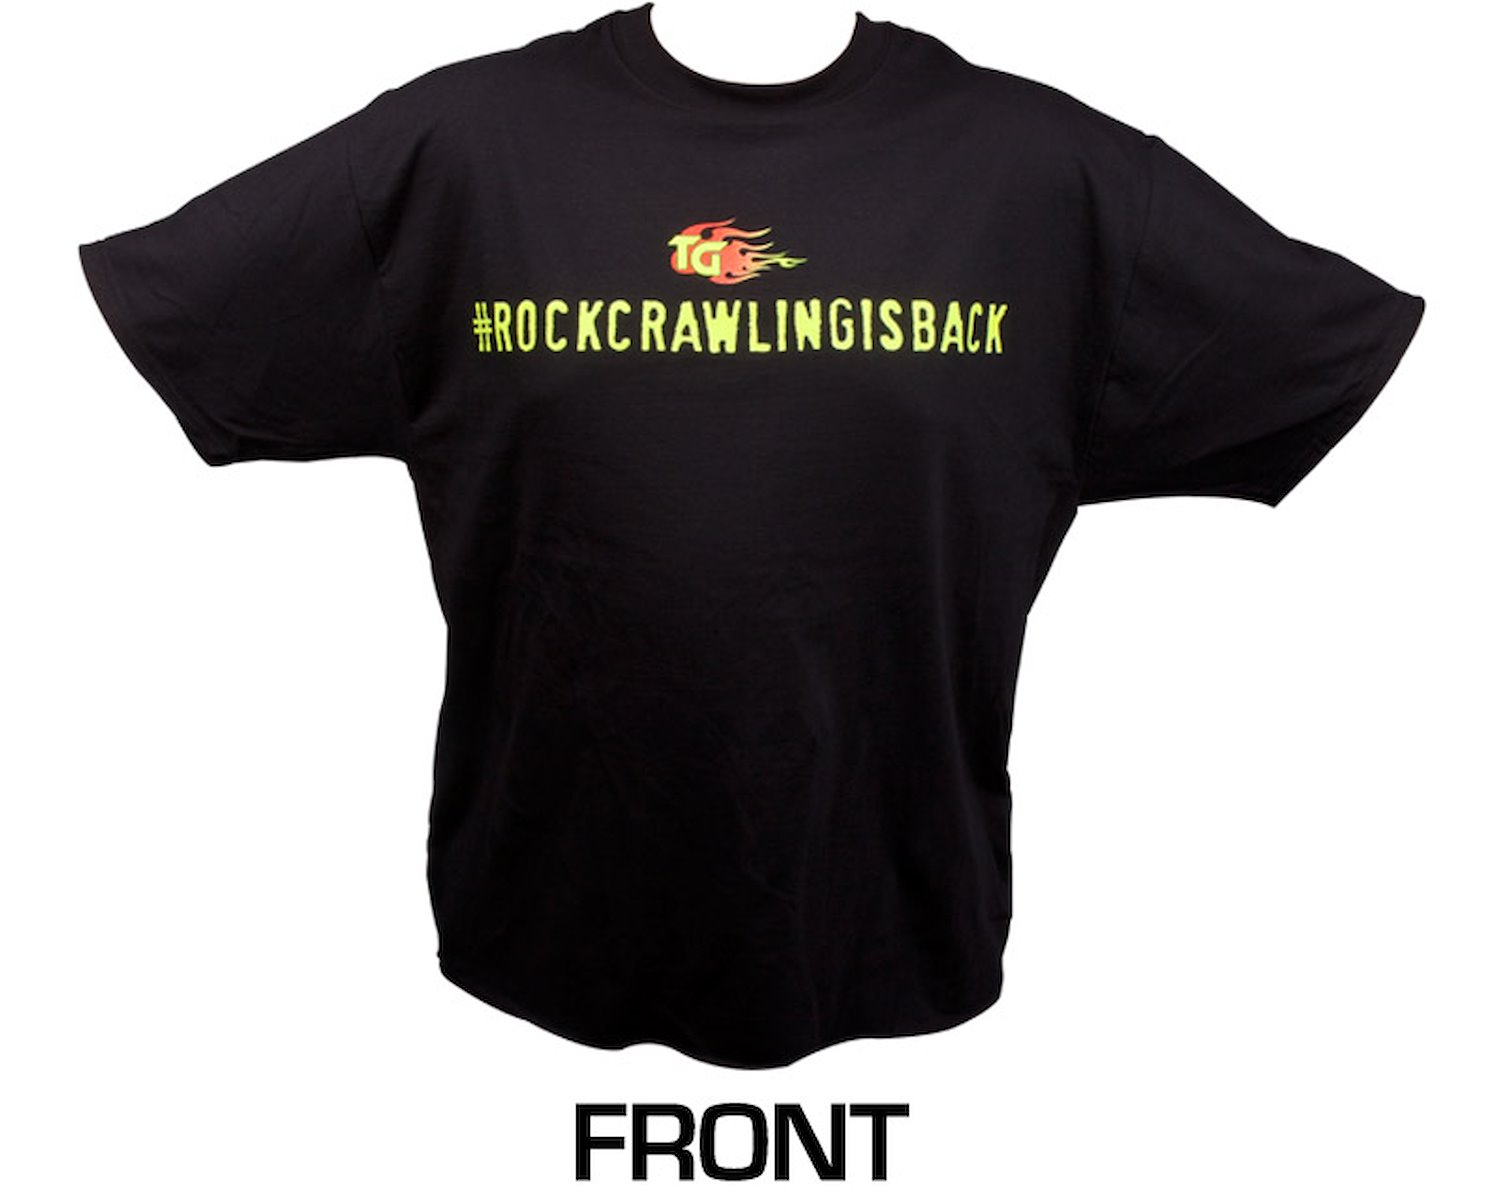 Short Sleeved Black Shirt #rockcrawlingisback Small